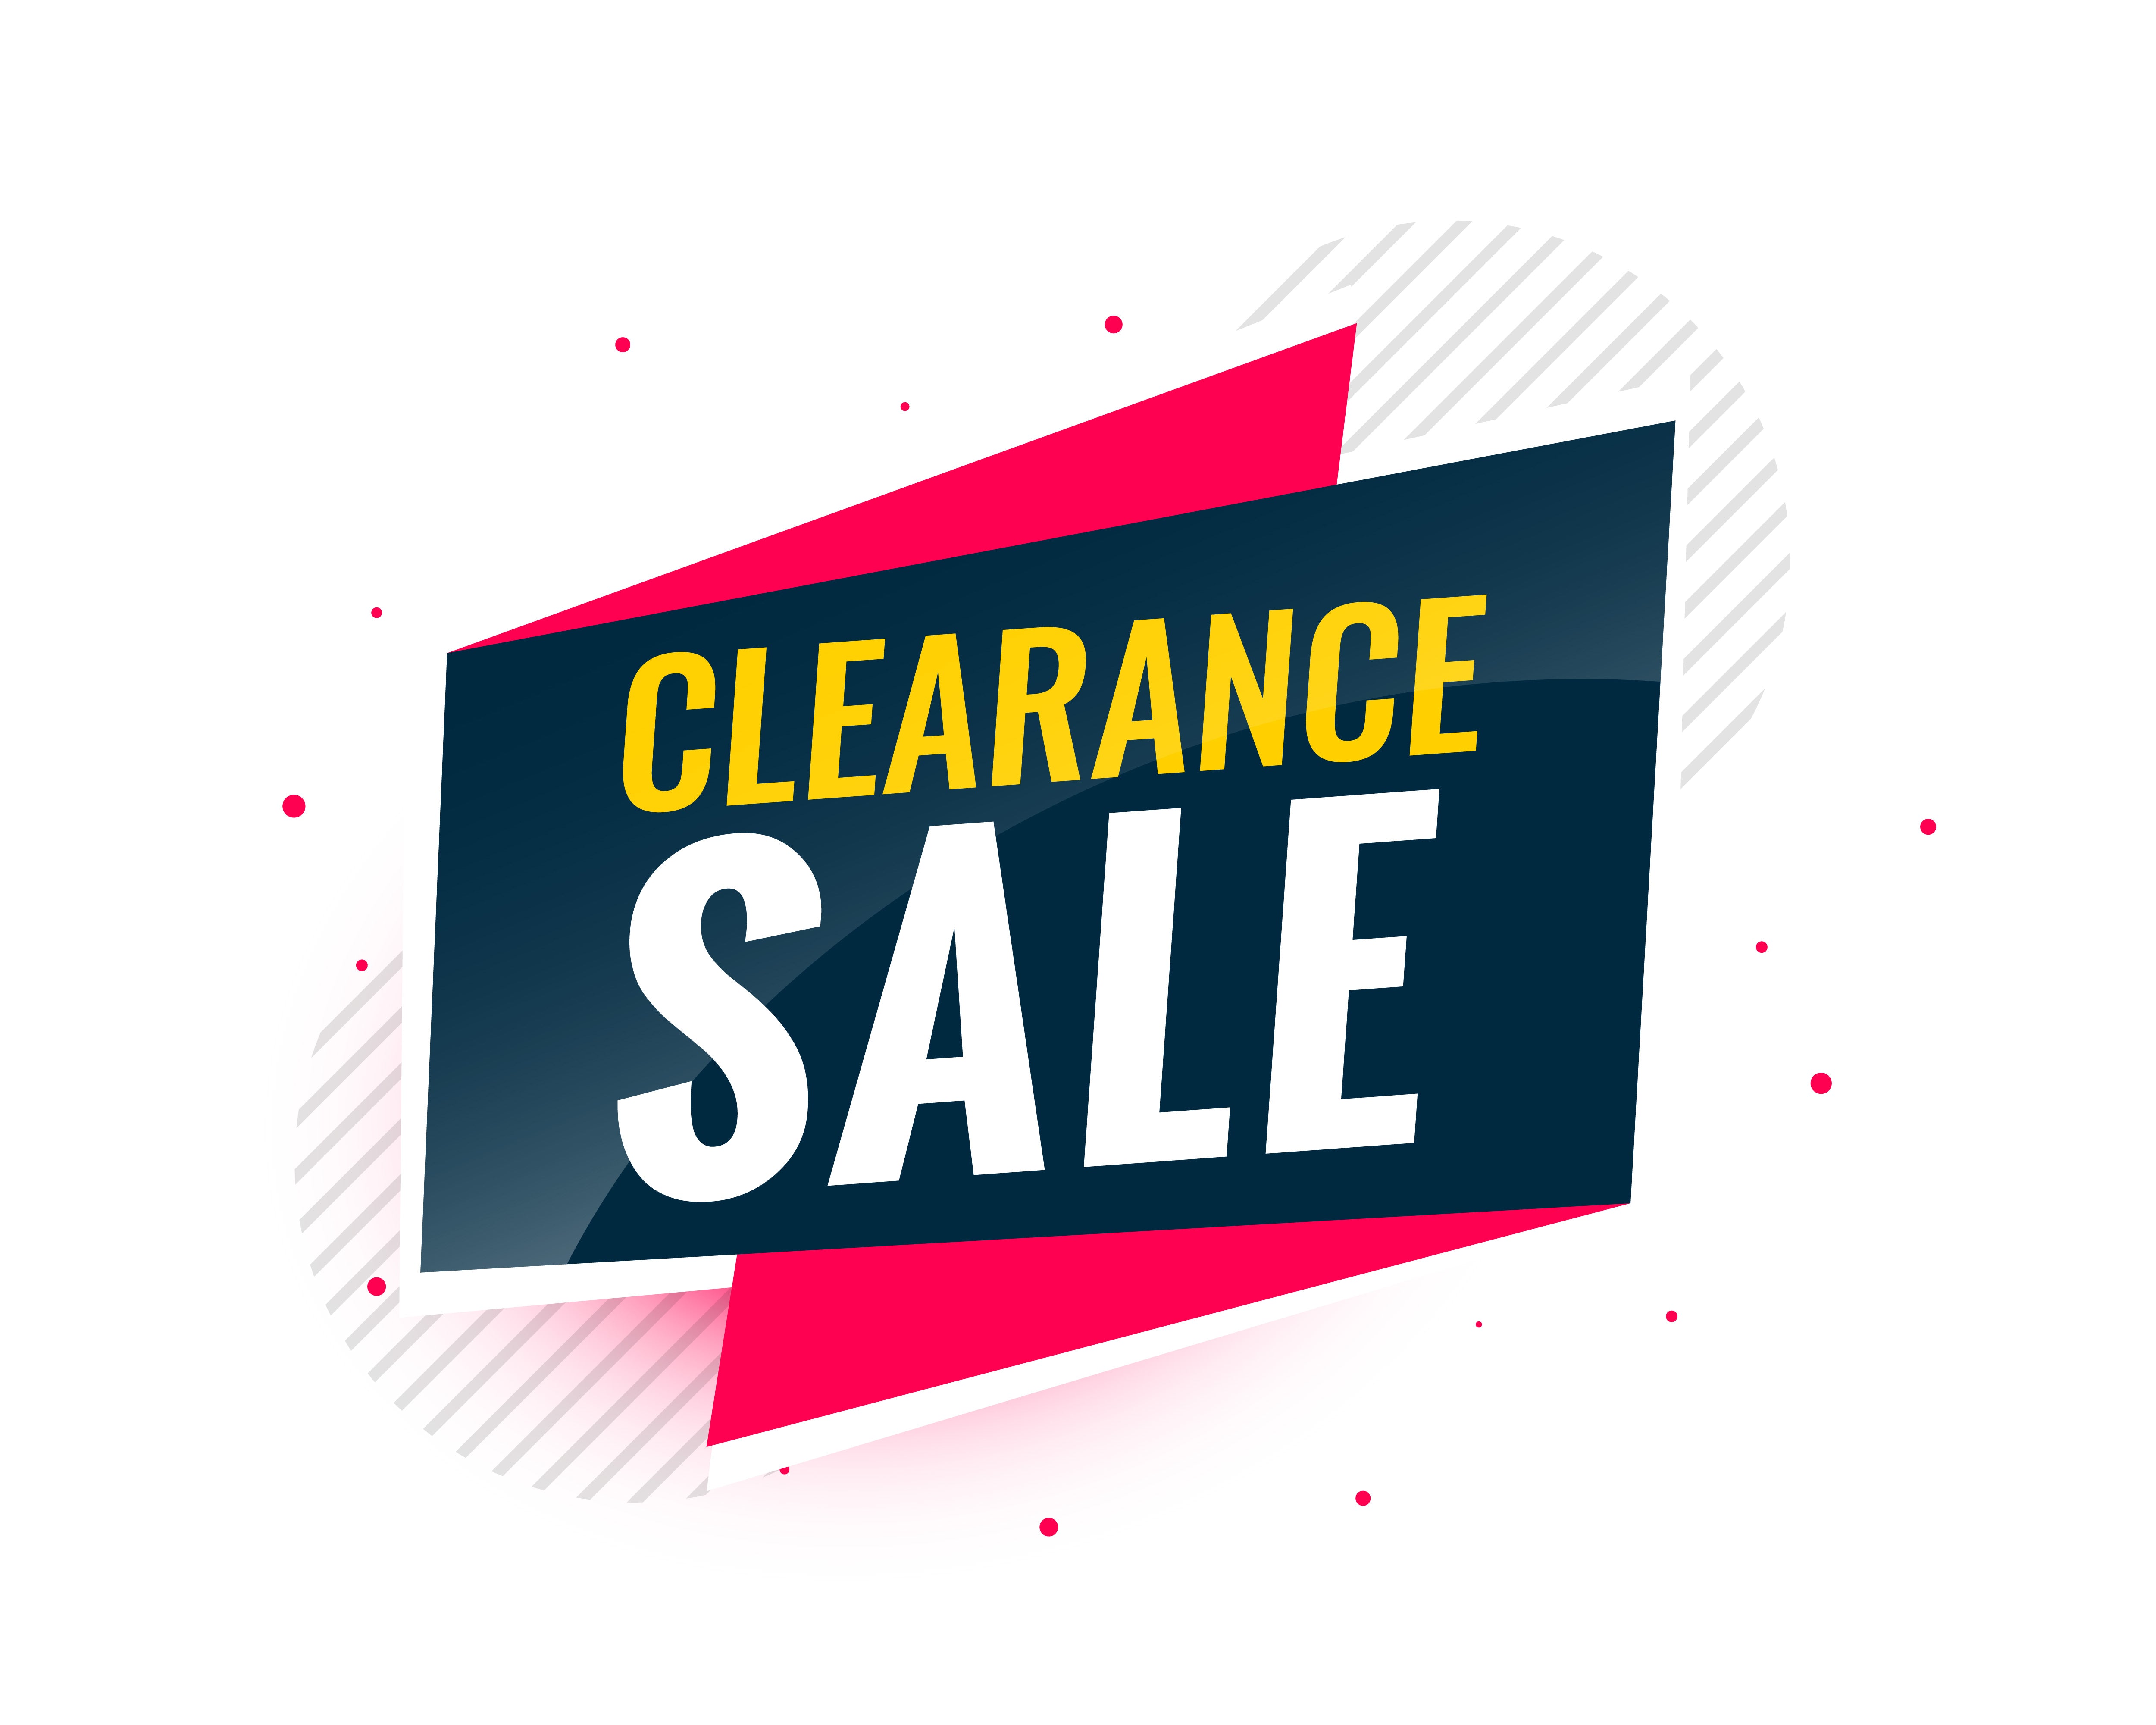 Clearance sale with Fondazzjoni Sebh!